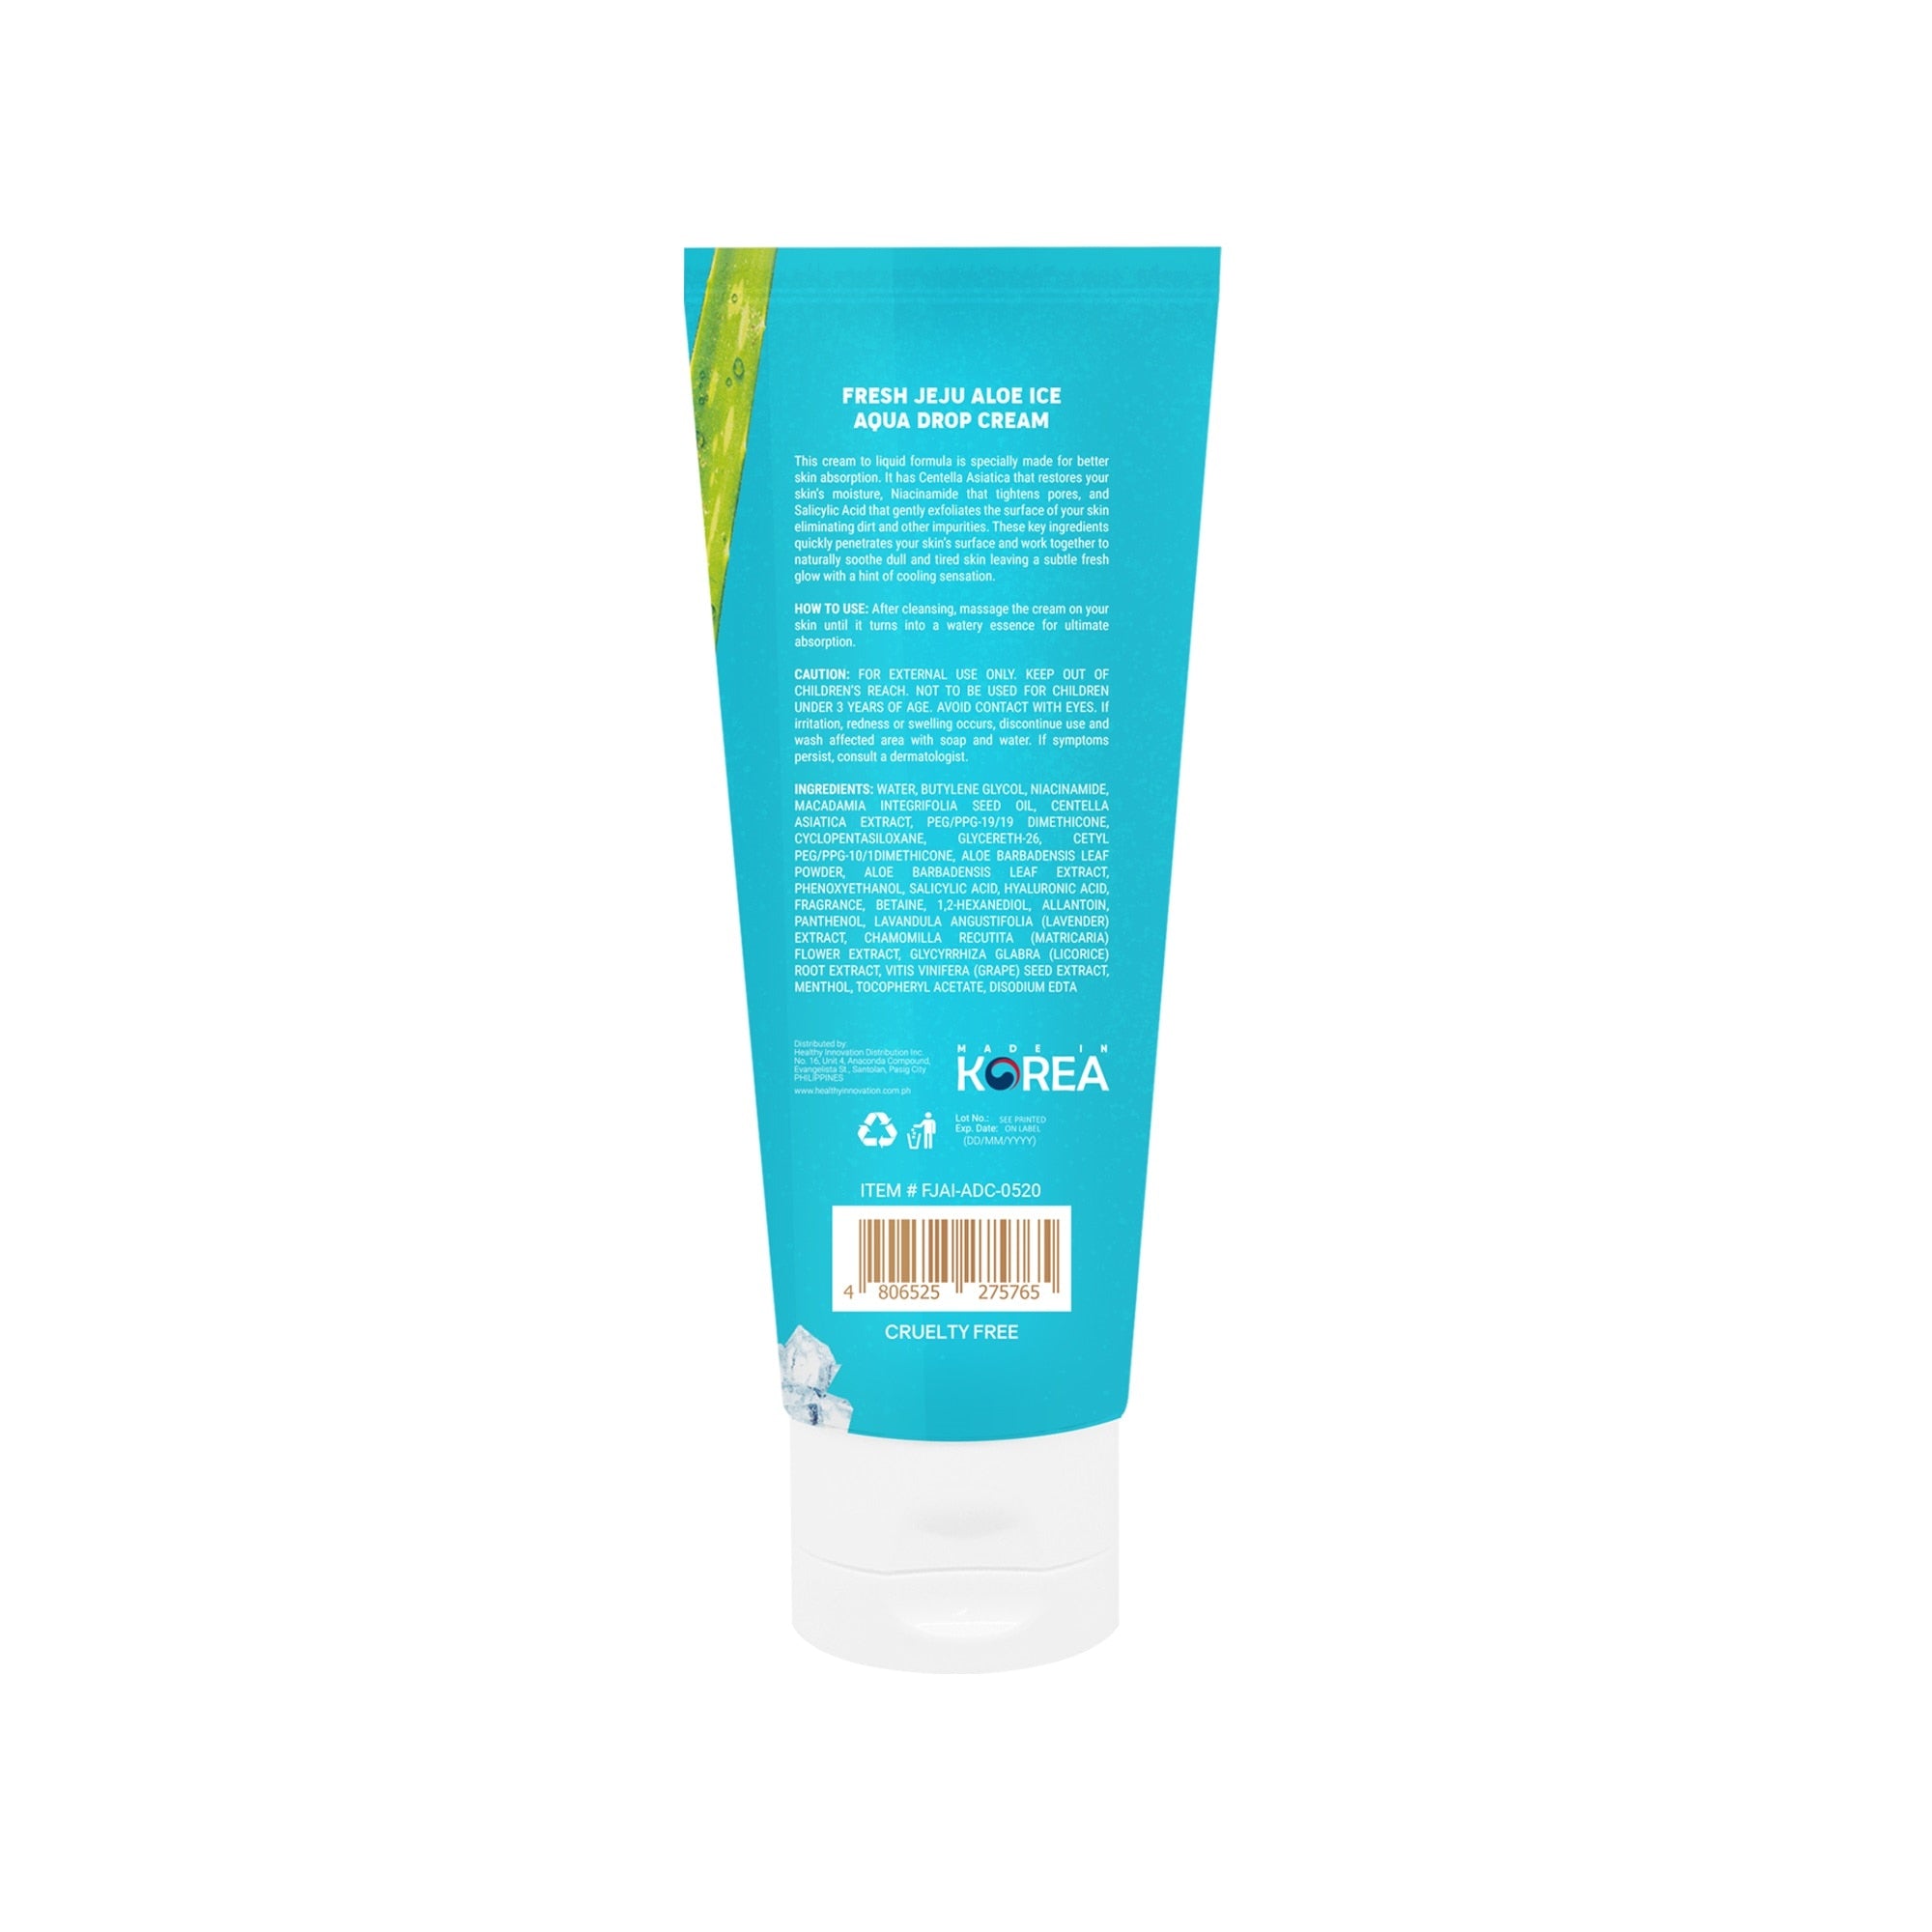 Fresh Skinlab Jeju Aloe Ice Aqua Drop Cream 80ml (EXP: MAY 2024)